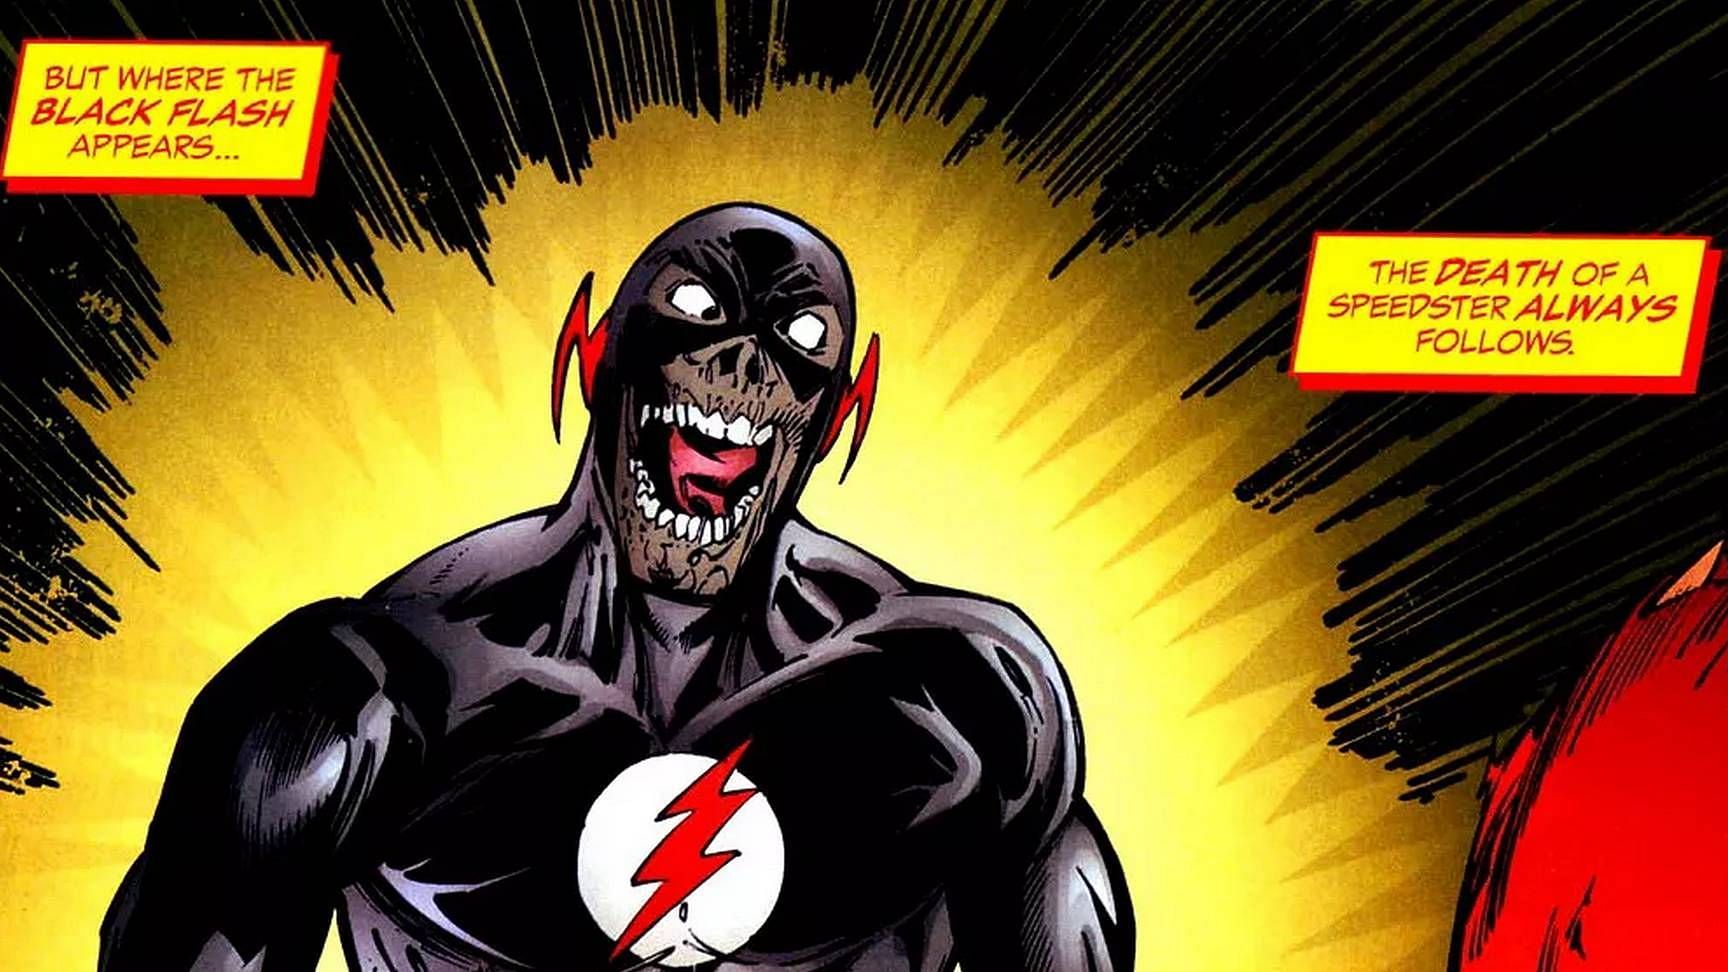 Black Flash in the comics (Image via DC Comics)